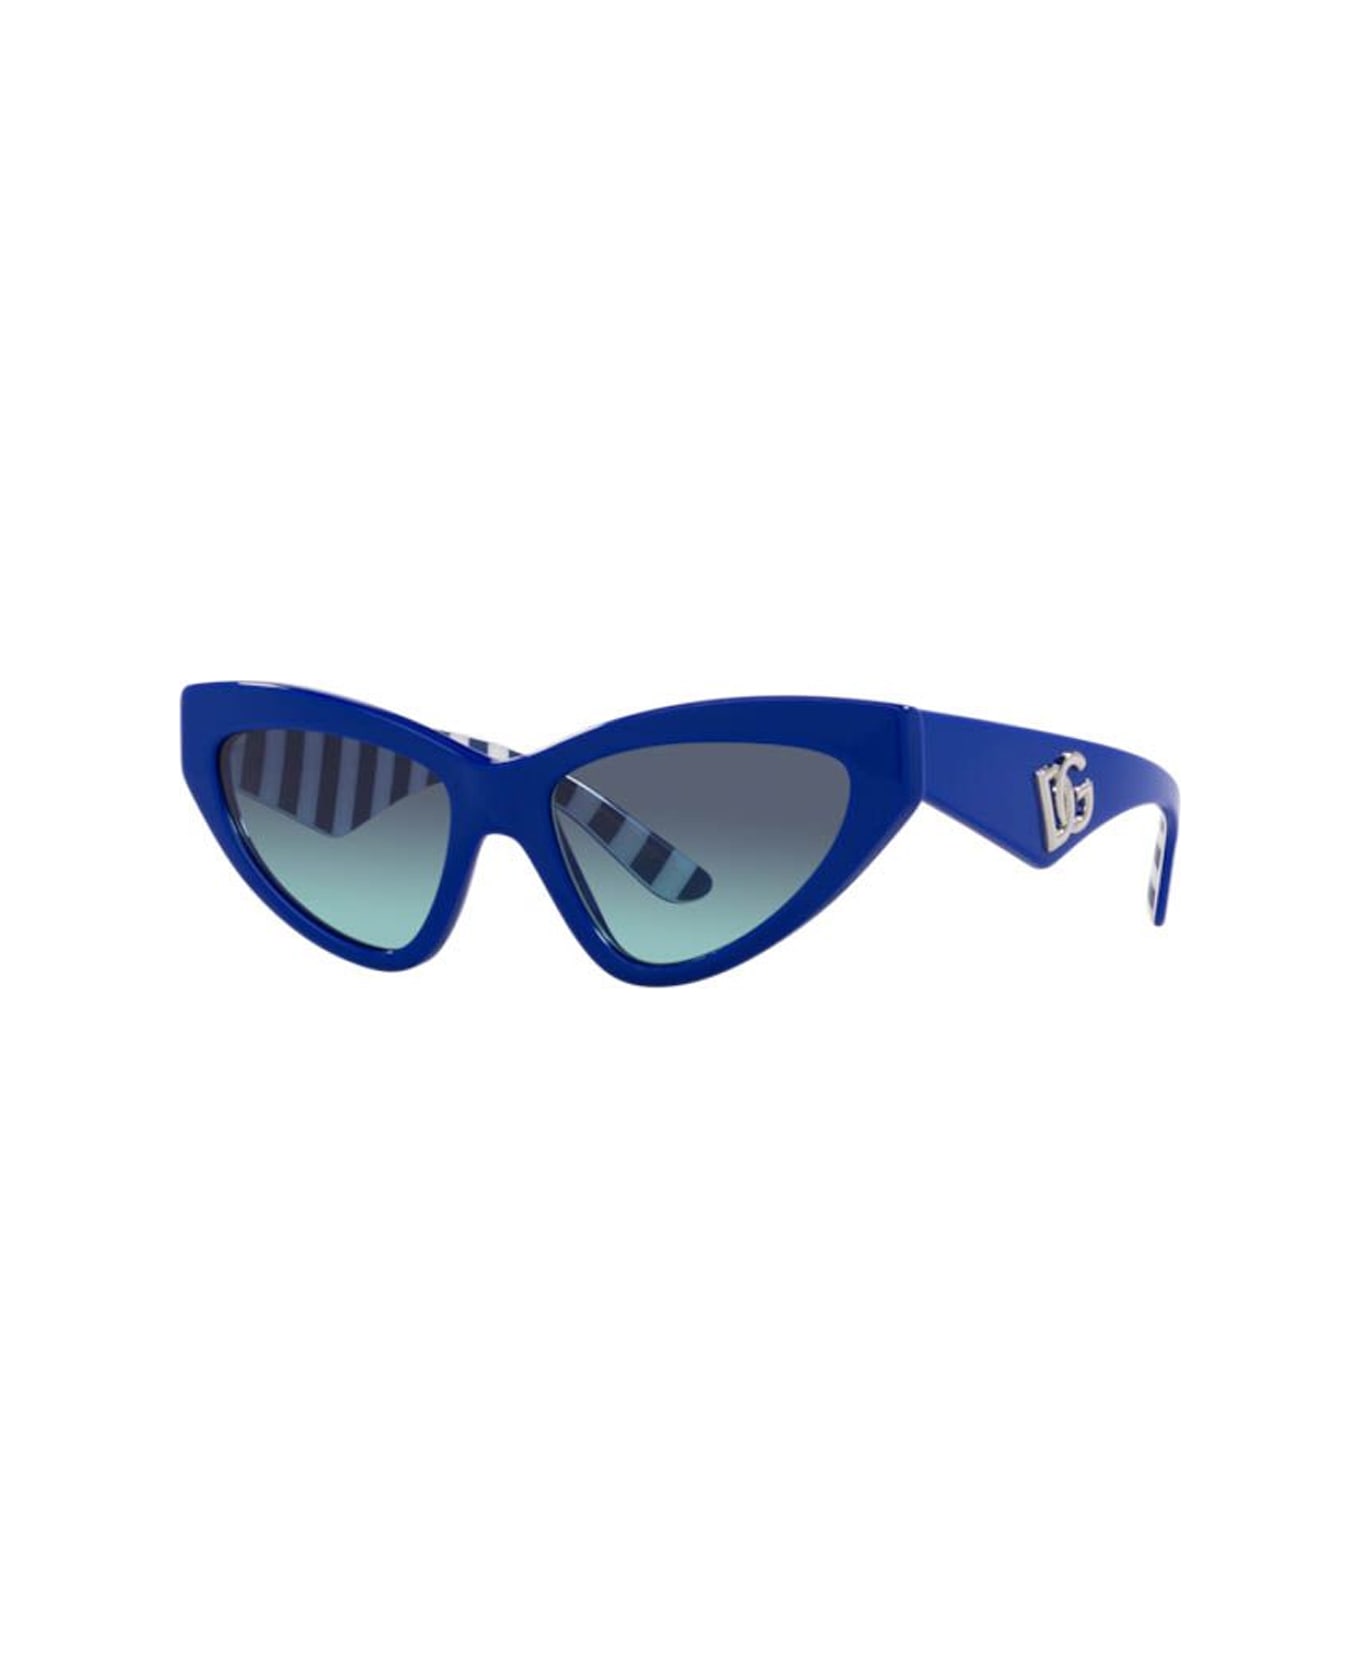 Dolce & Gabbana Eyewear Dg4439 311945 Sunglasses - Blu